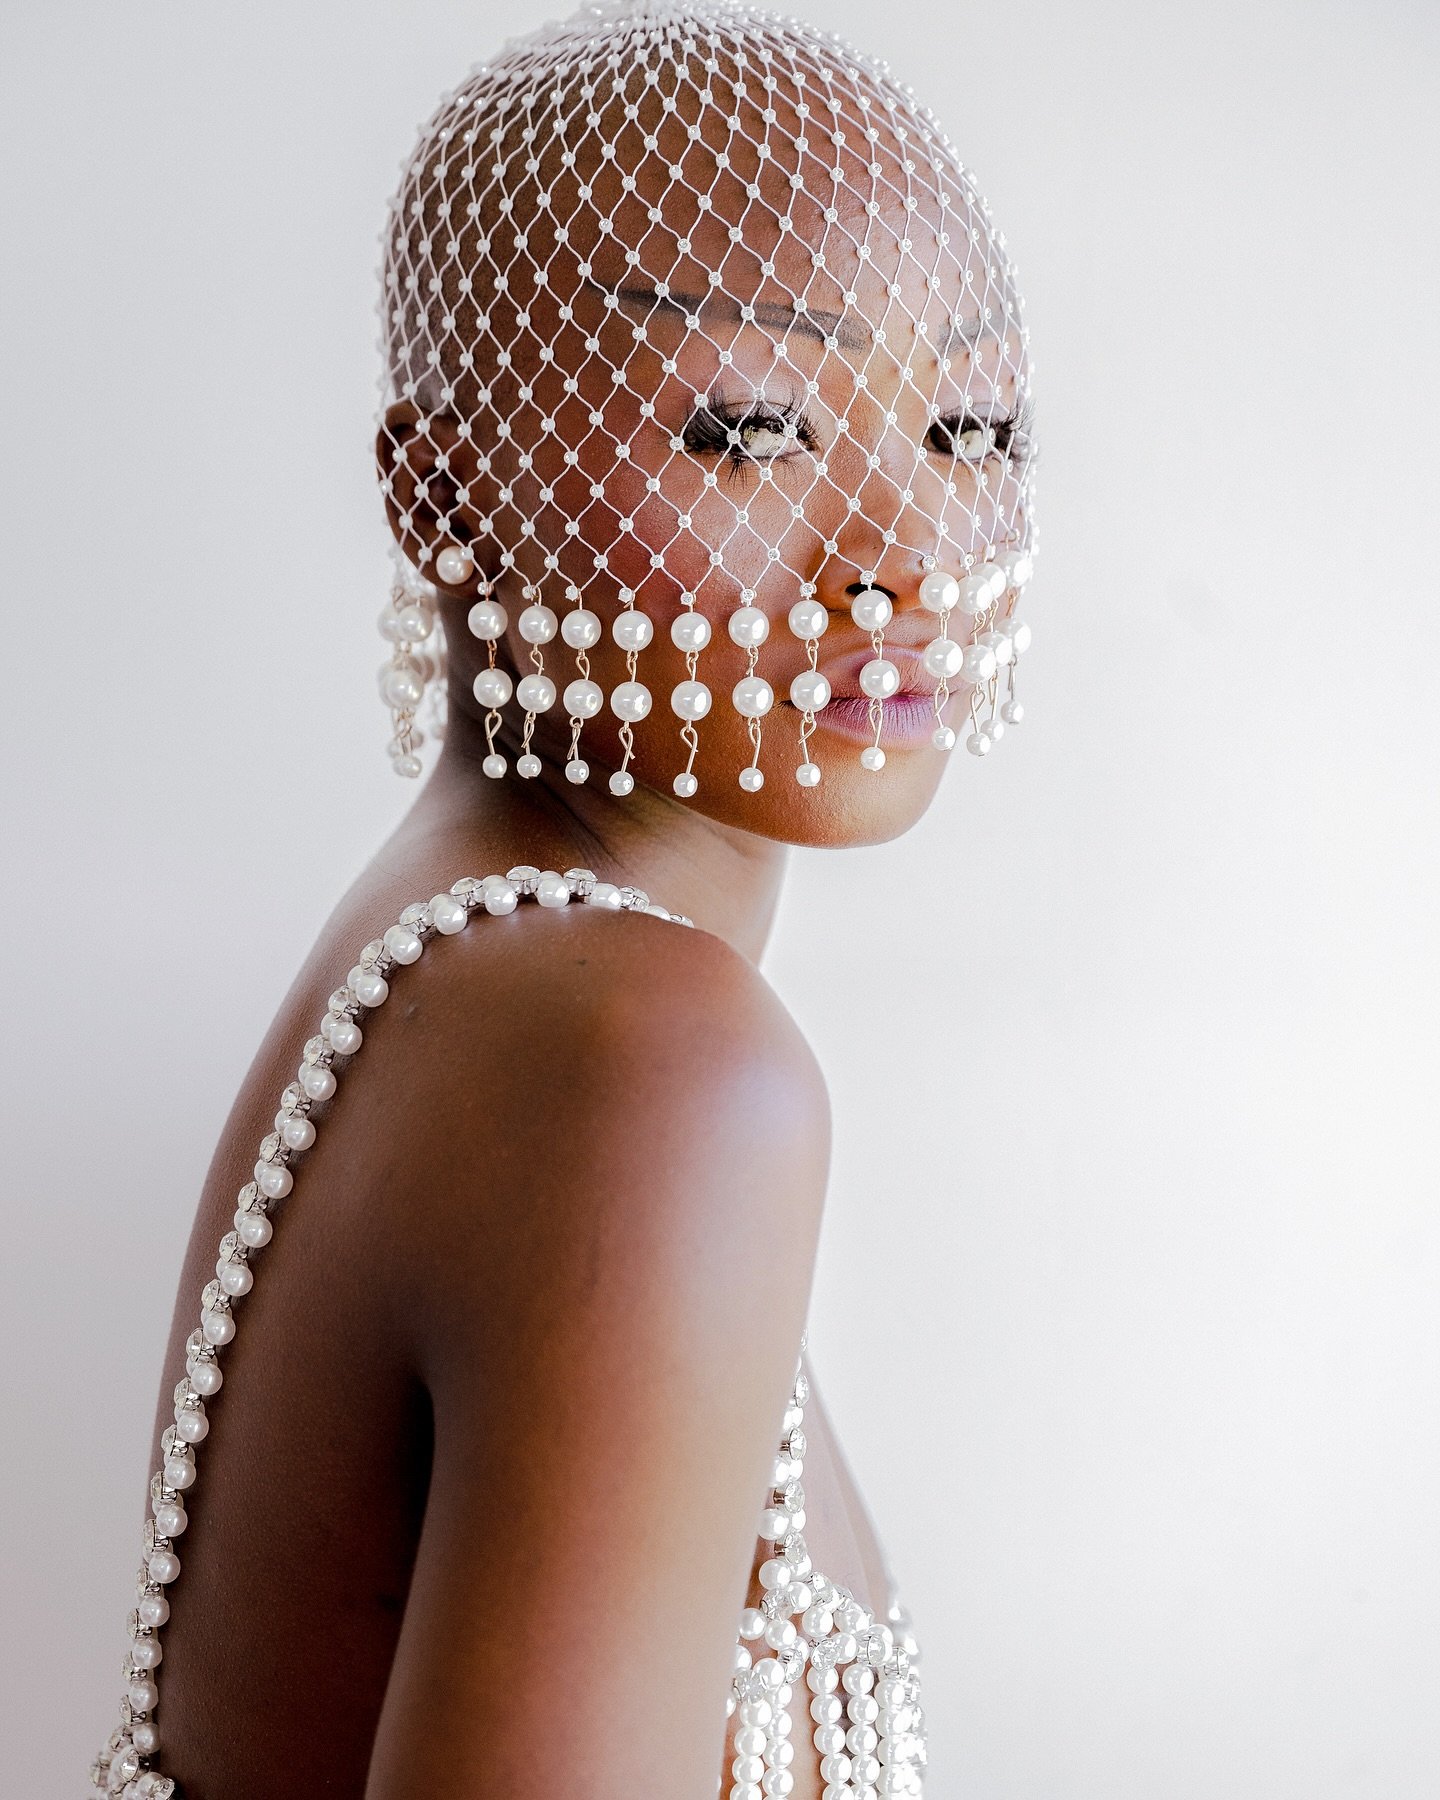 💎 

@benanialmaphanga @joyproctor @ncedomazibuko 

#fashion #eswatini #pearls #photographer #fashionstyle #editorial